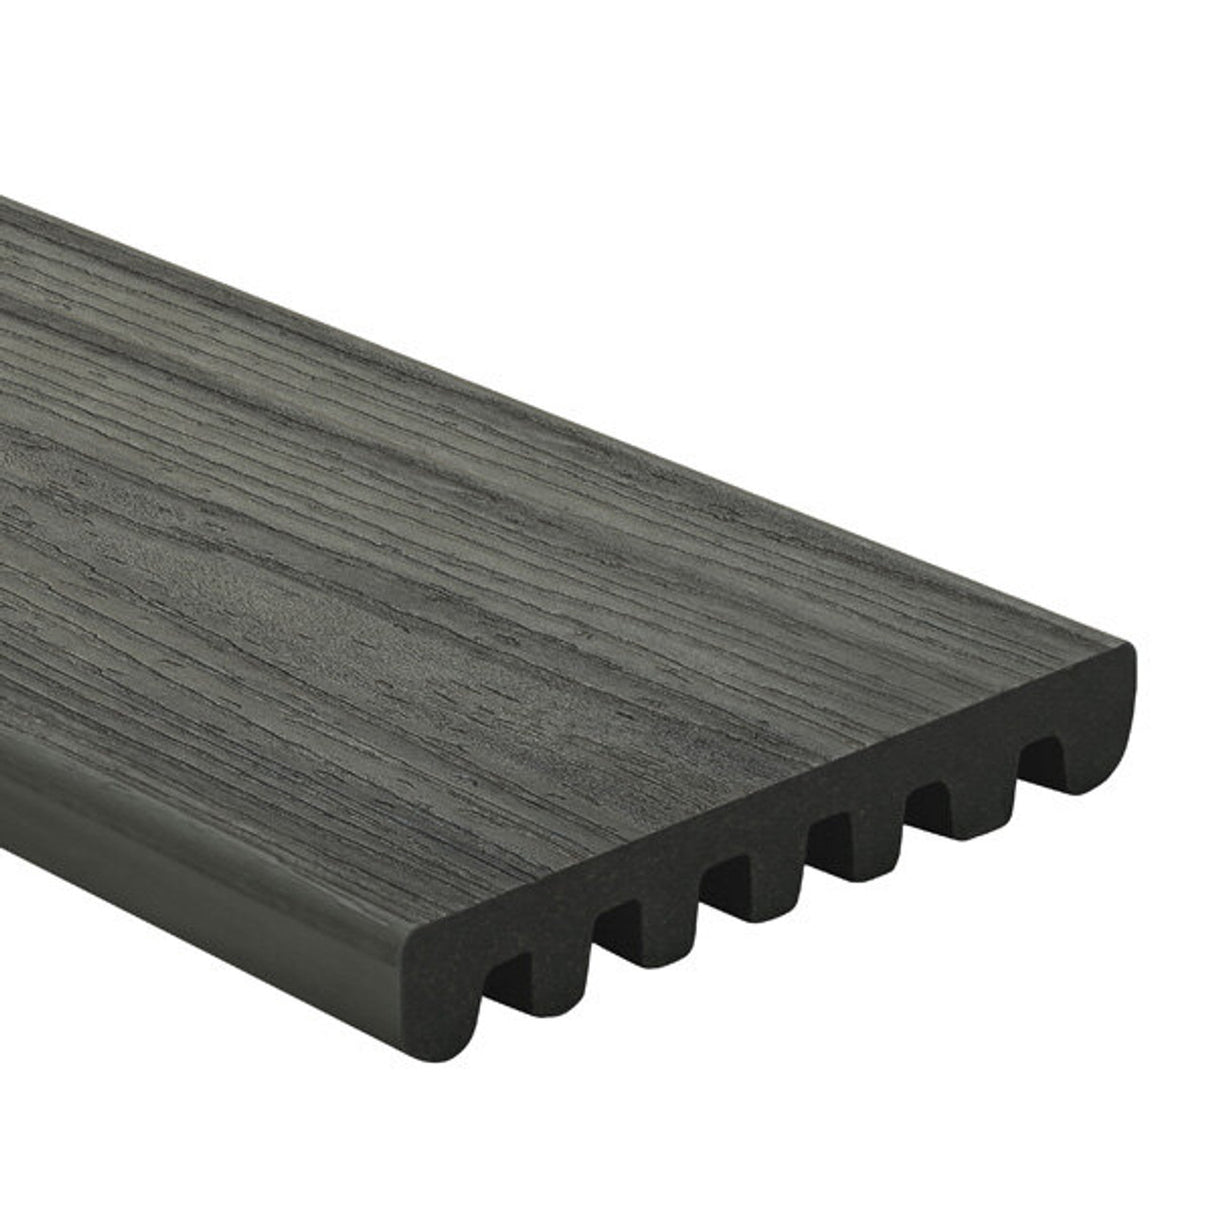 Trex Decking Board Composite Fascia 14mmx184mm Calm Water 3660mm